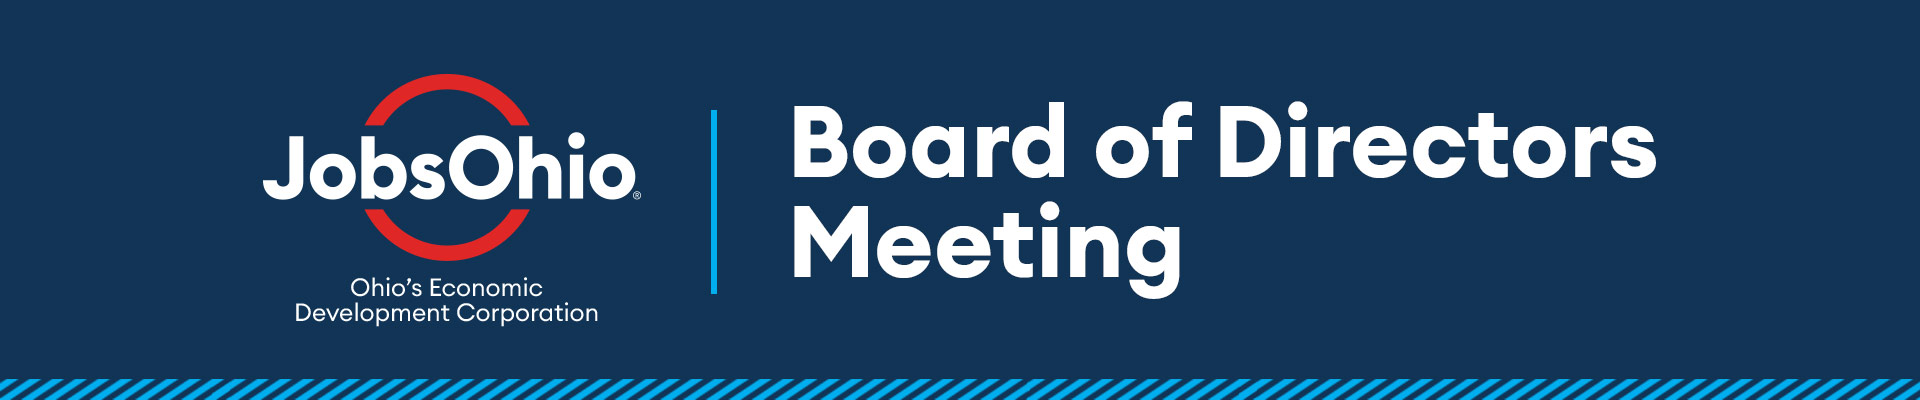 JobsOhio | Board of Directors Meeting | Q3 2022: September 16, 2022